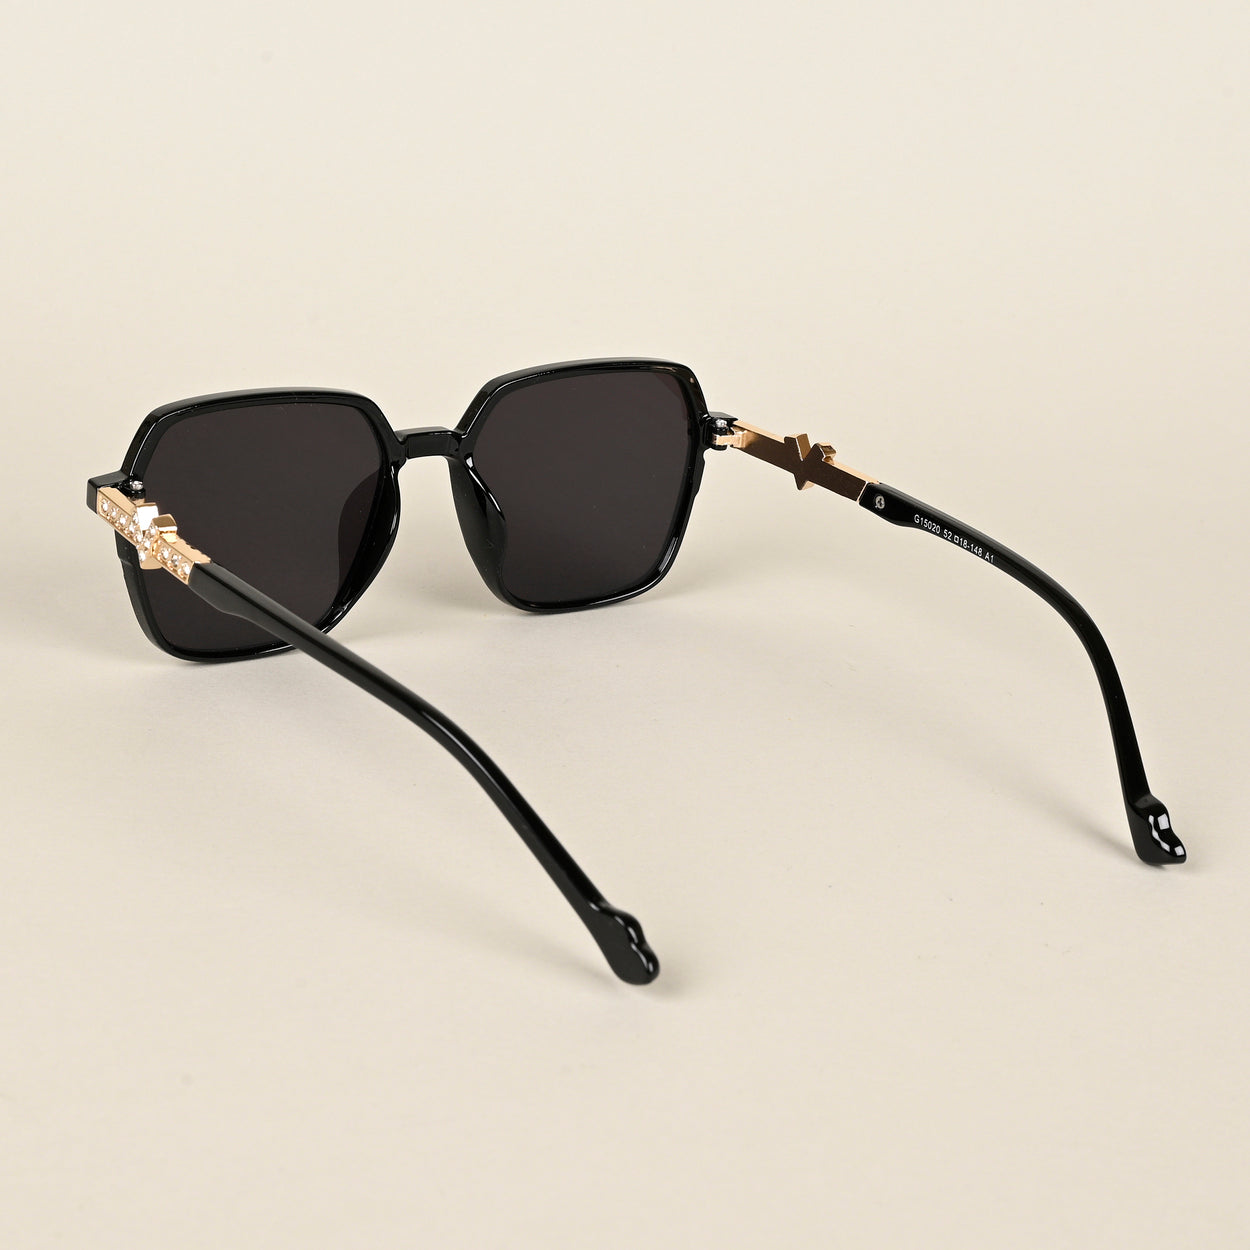 Voyage Black Square Sunglasses for Women - MG4231